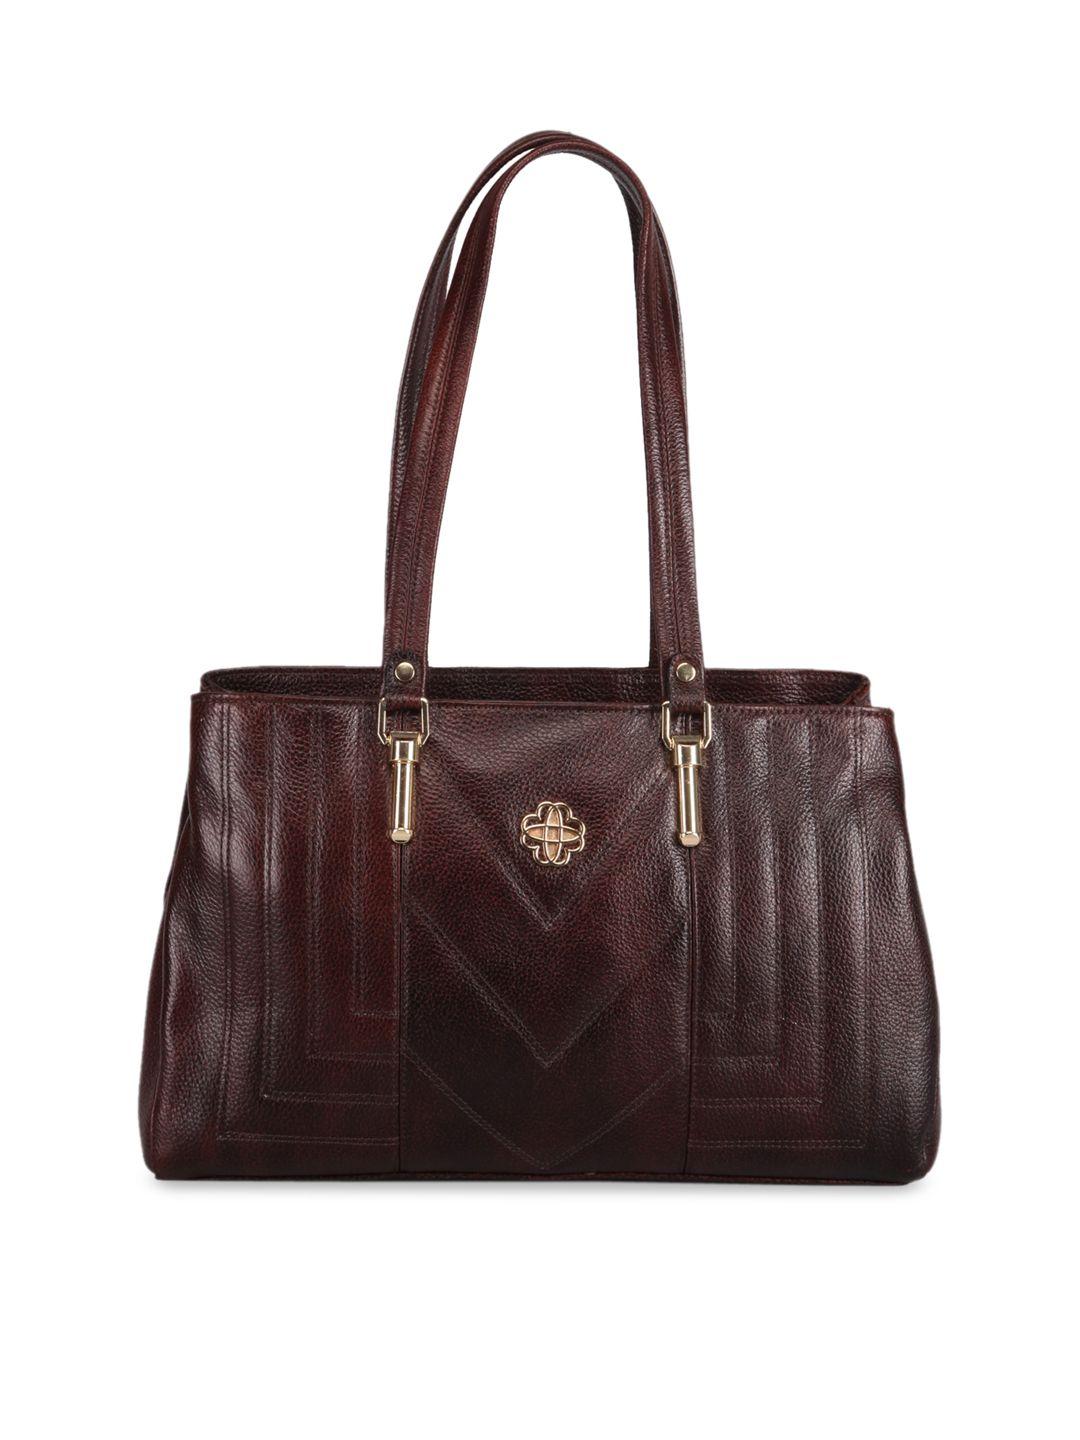 genwayne brown textured leather shopper handheld bag